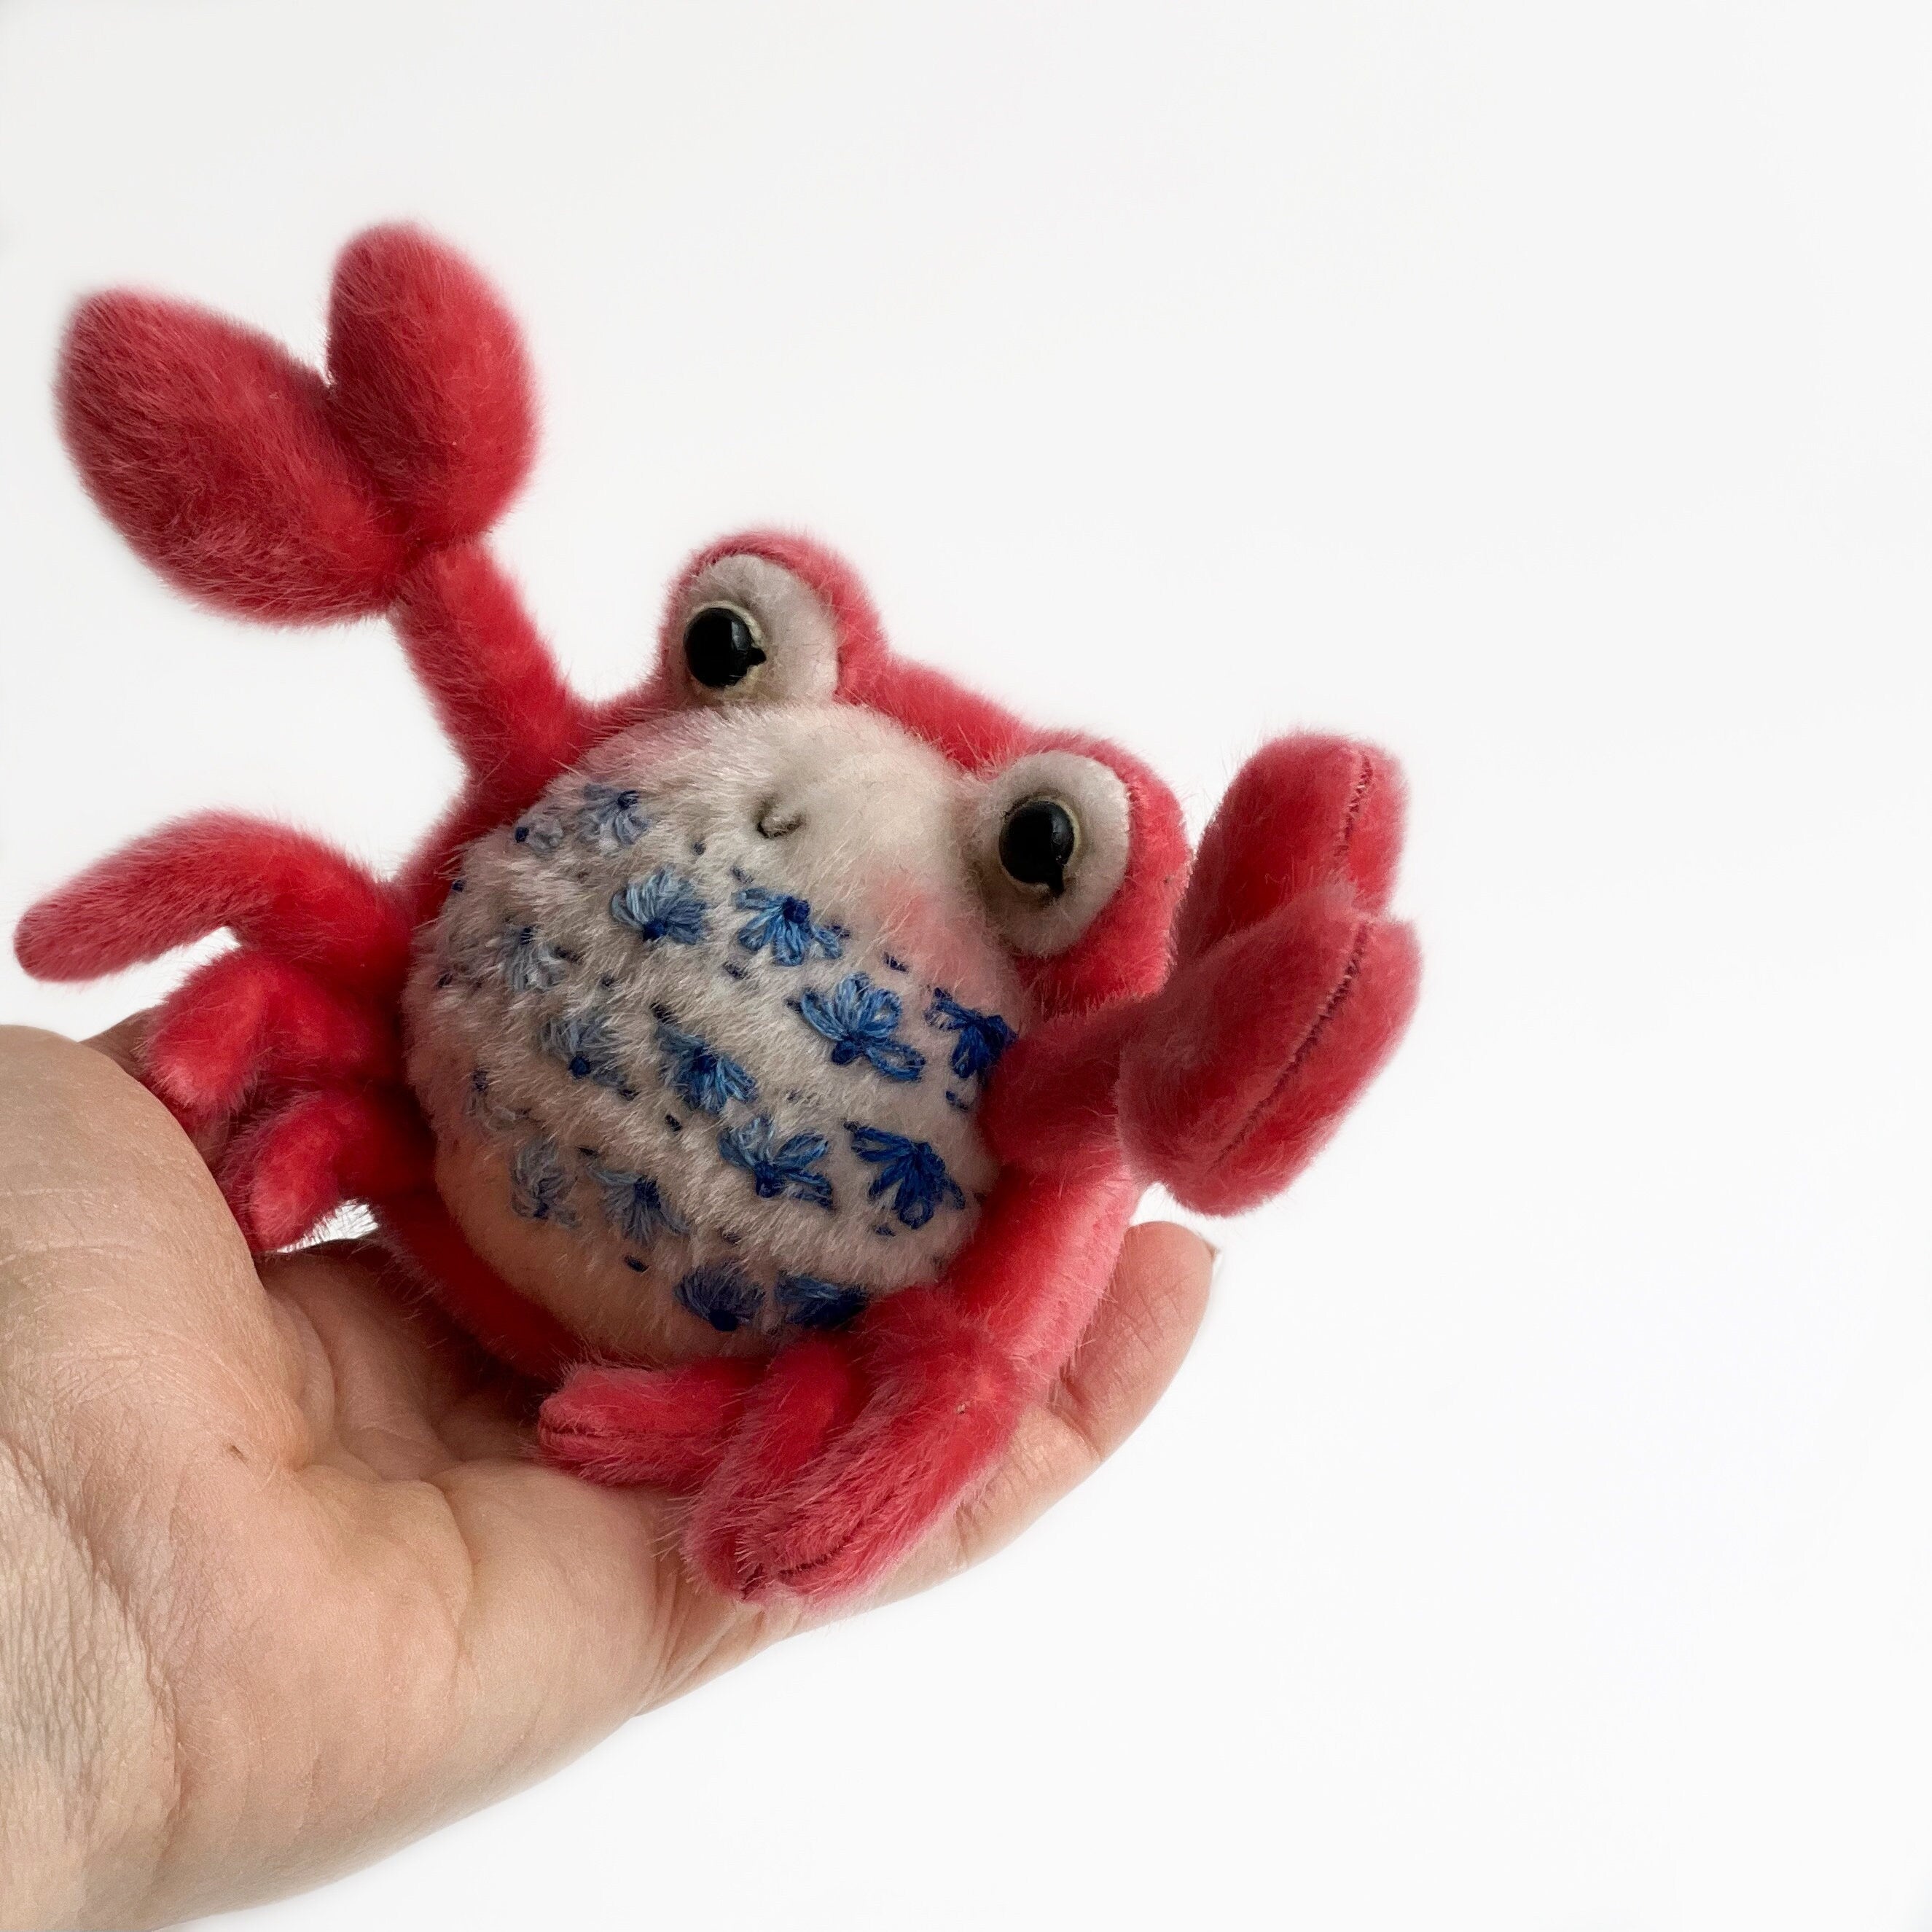 4 in 1 PATTERN Ocean Sea animals 3 Sea Star Squid Crab Shrimp PDF sewing patterns Video tutorial DIY stuffed toy kids easy to sew